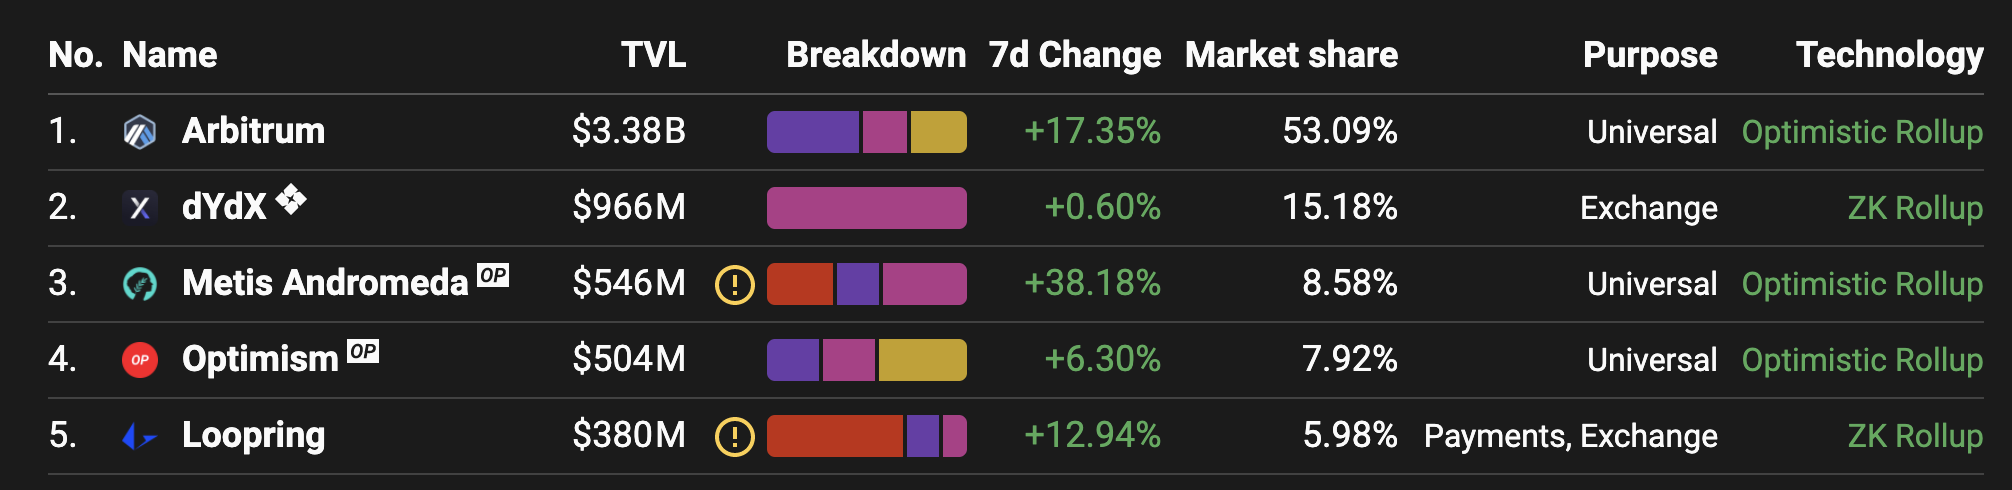 Rollup stats: TVL, Breakdown, Market Share, etc. 